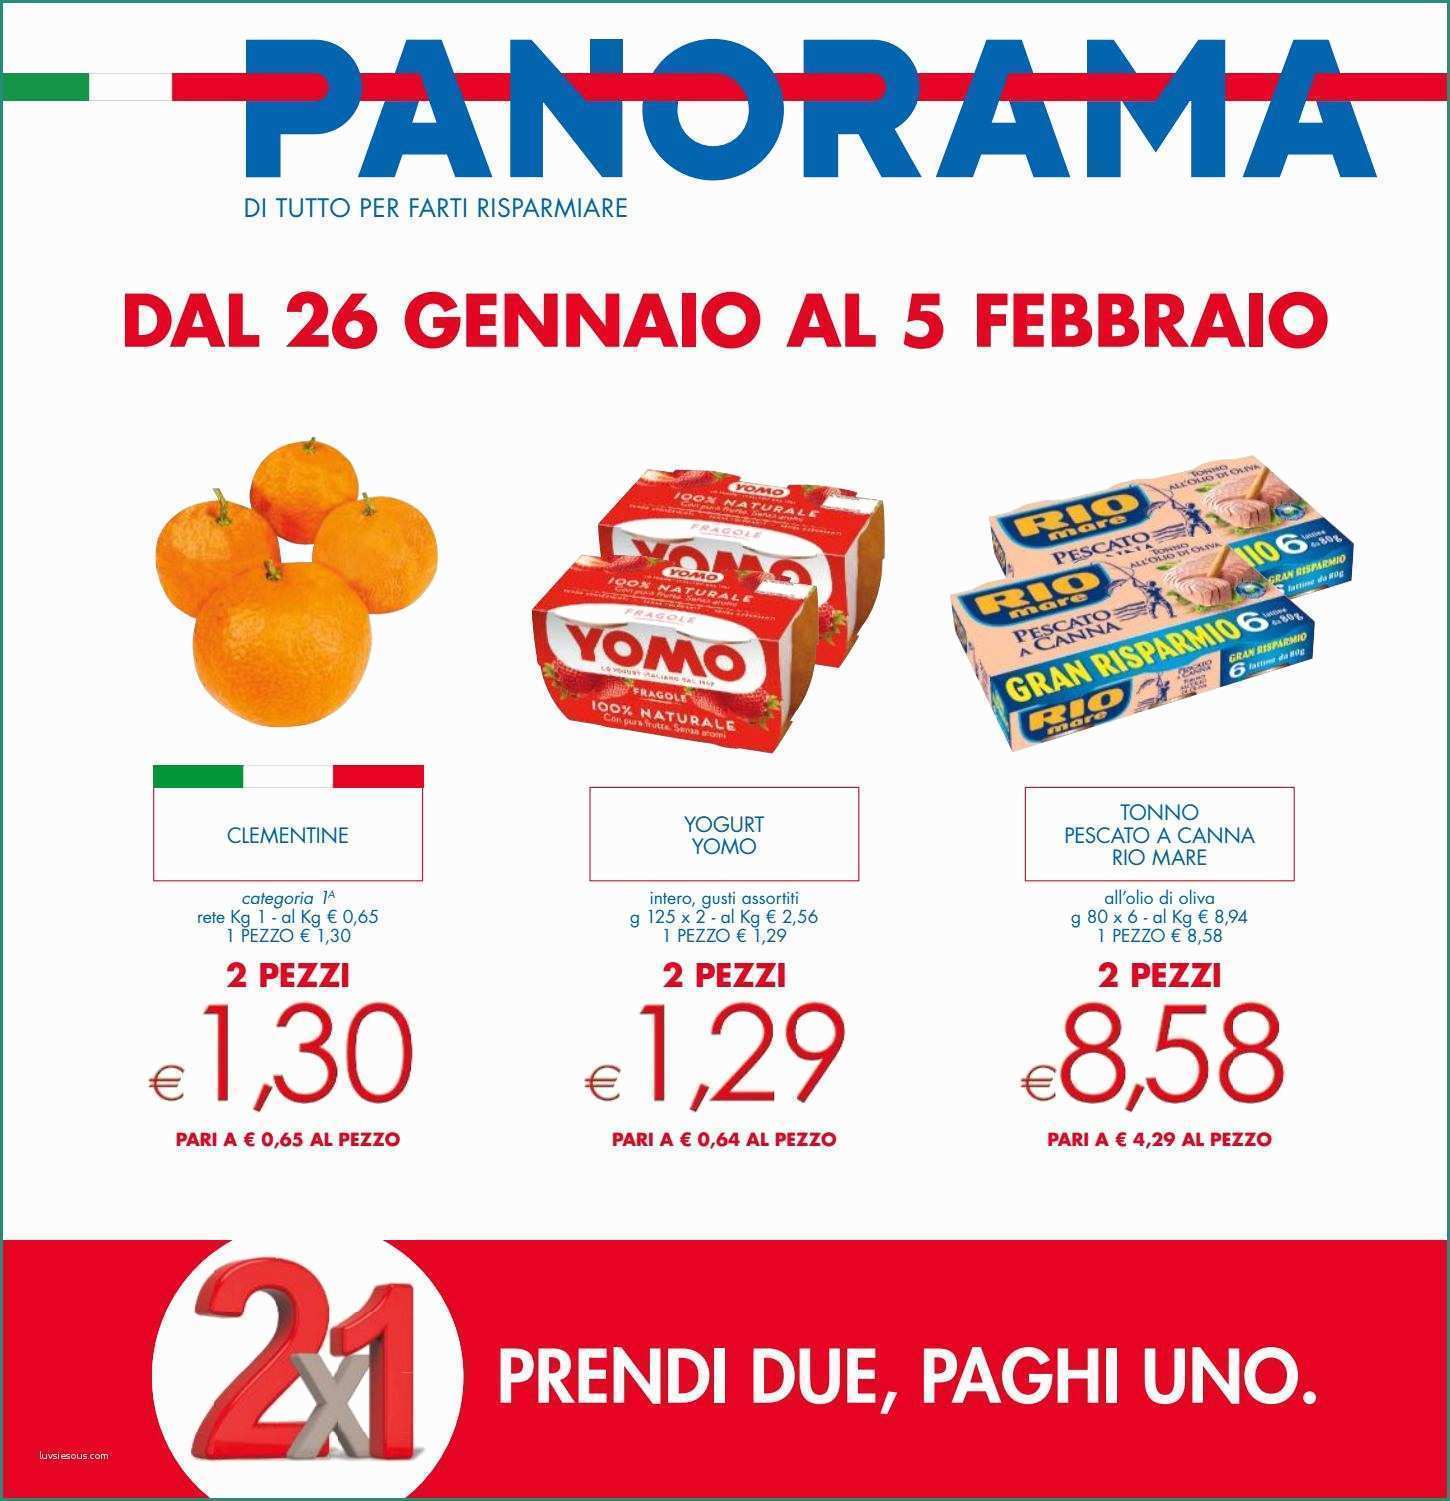 Prezzo Rame Sporco Al Kg E Panorama 5feb by Best Of Volantinoweb issuu